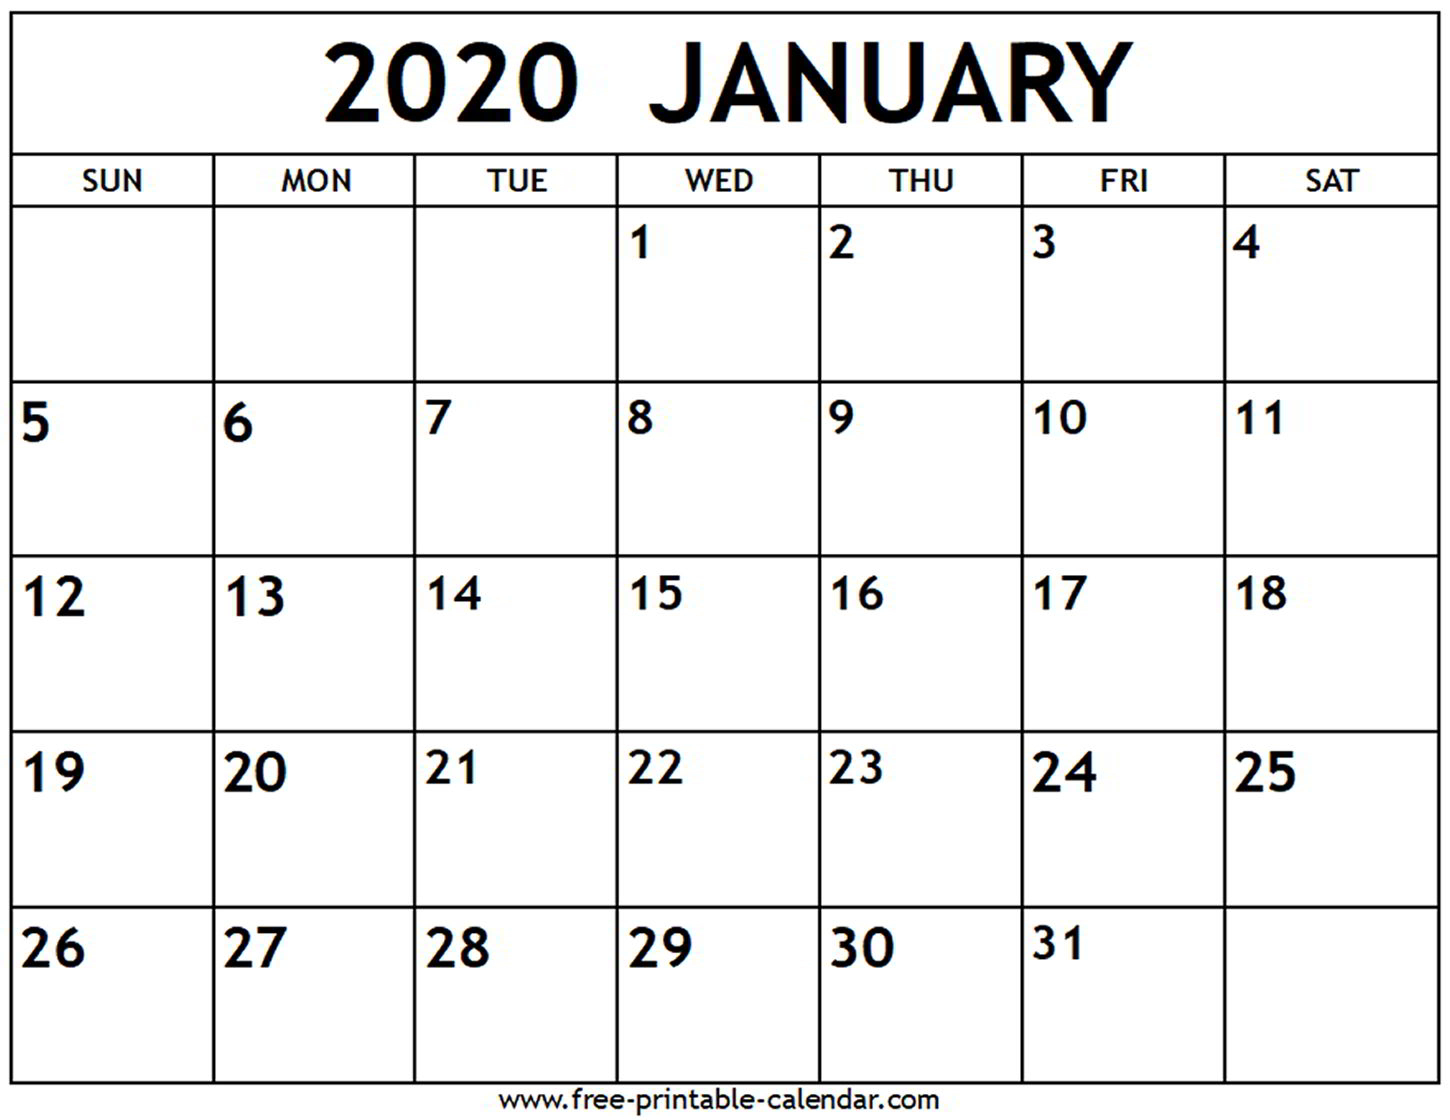 January 2020 Calendar - Free-Printable-Calendar